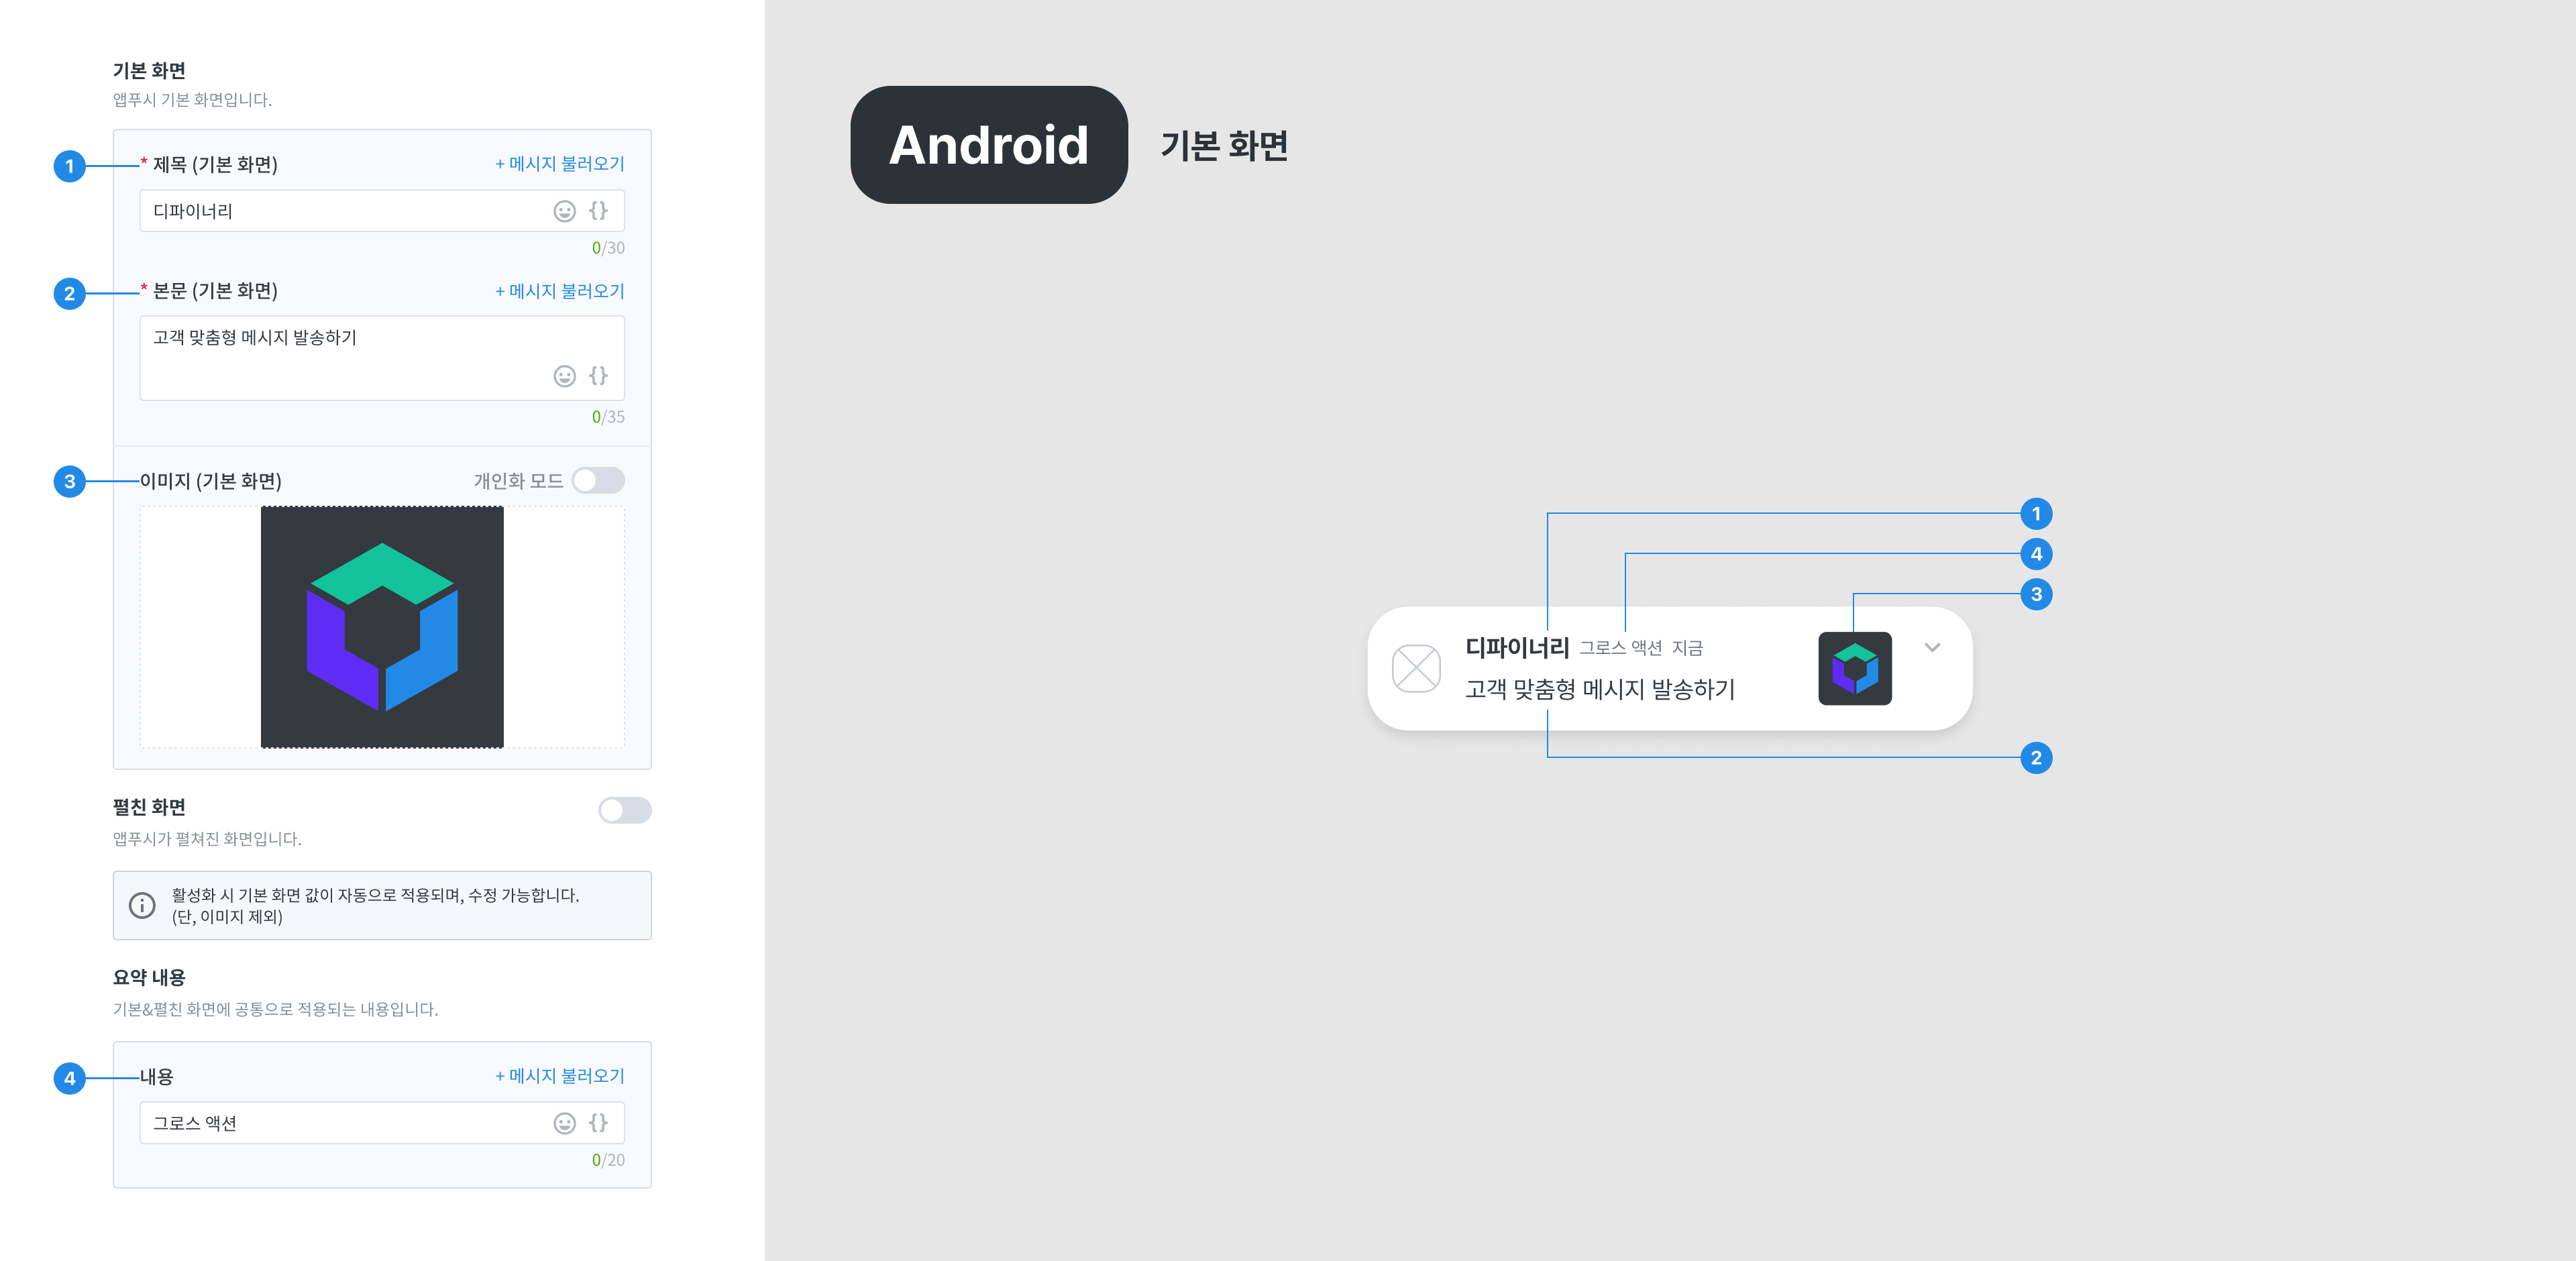 Android-앱푸시이미지(기본화면).png